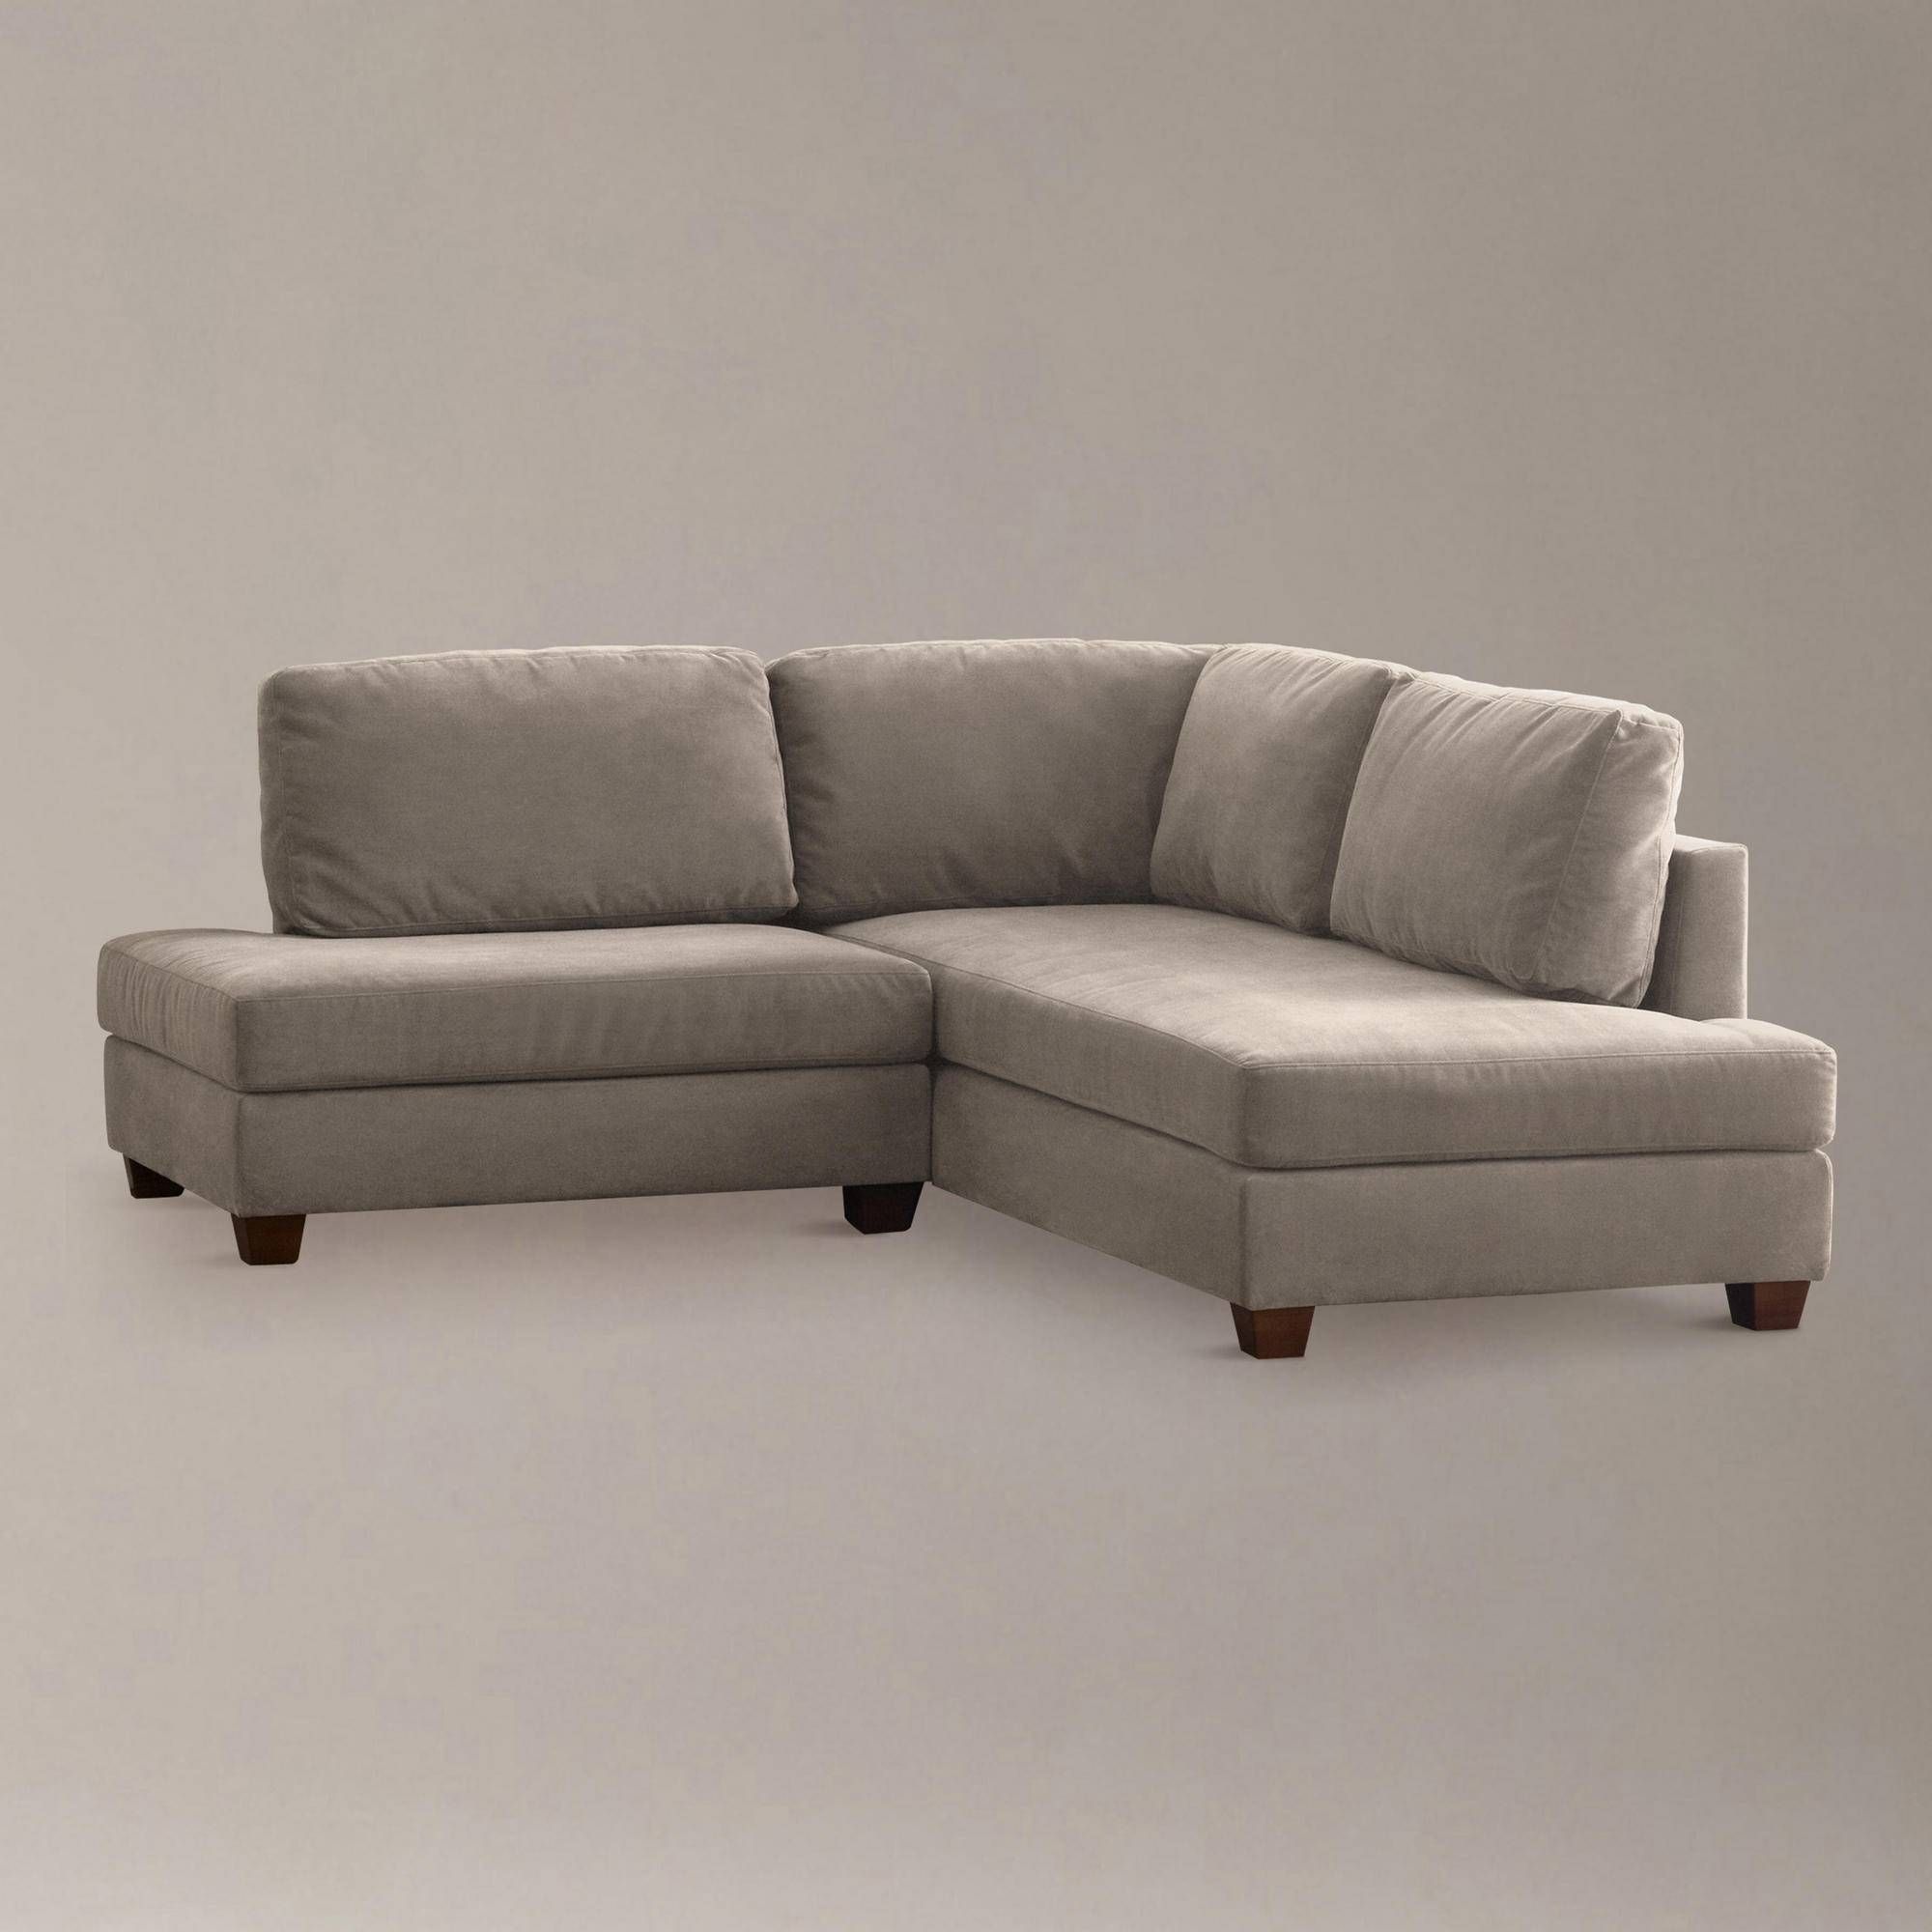 2017 Latest Small Modular Sectional Sofa